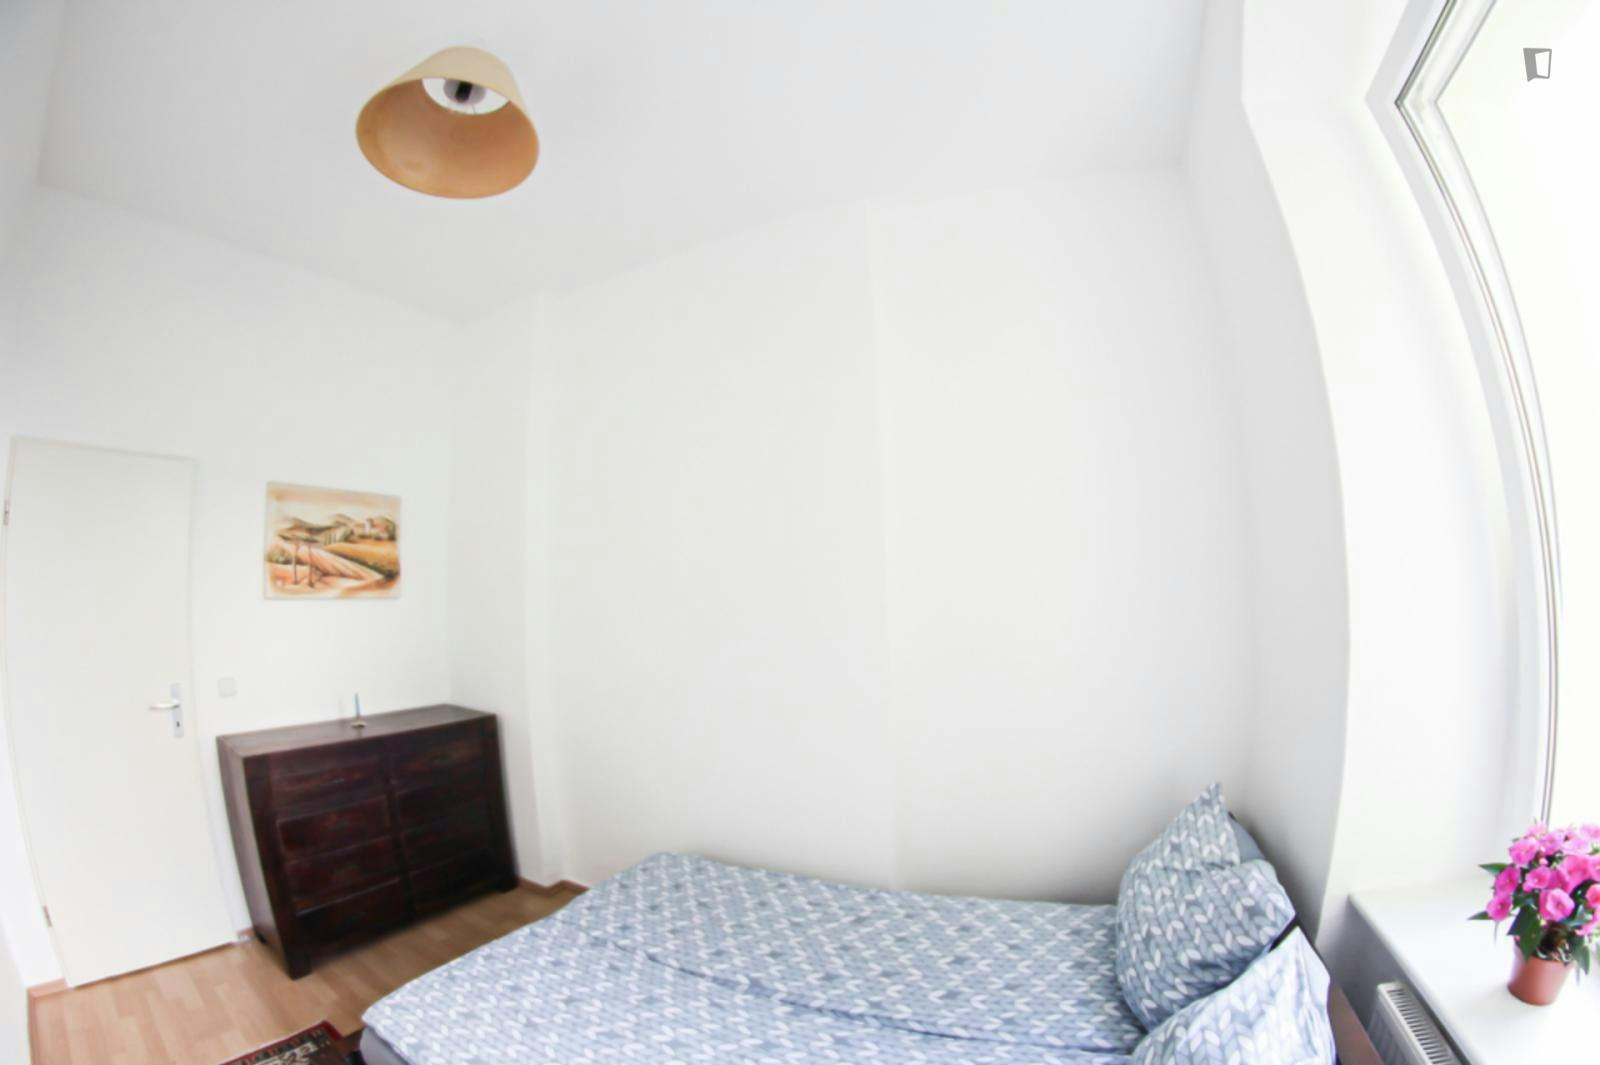 Homely 1-bedroom apartment in Neukölln 